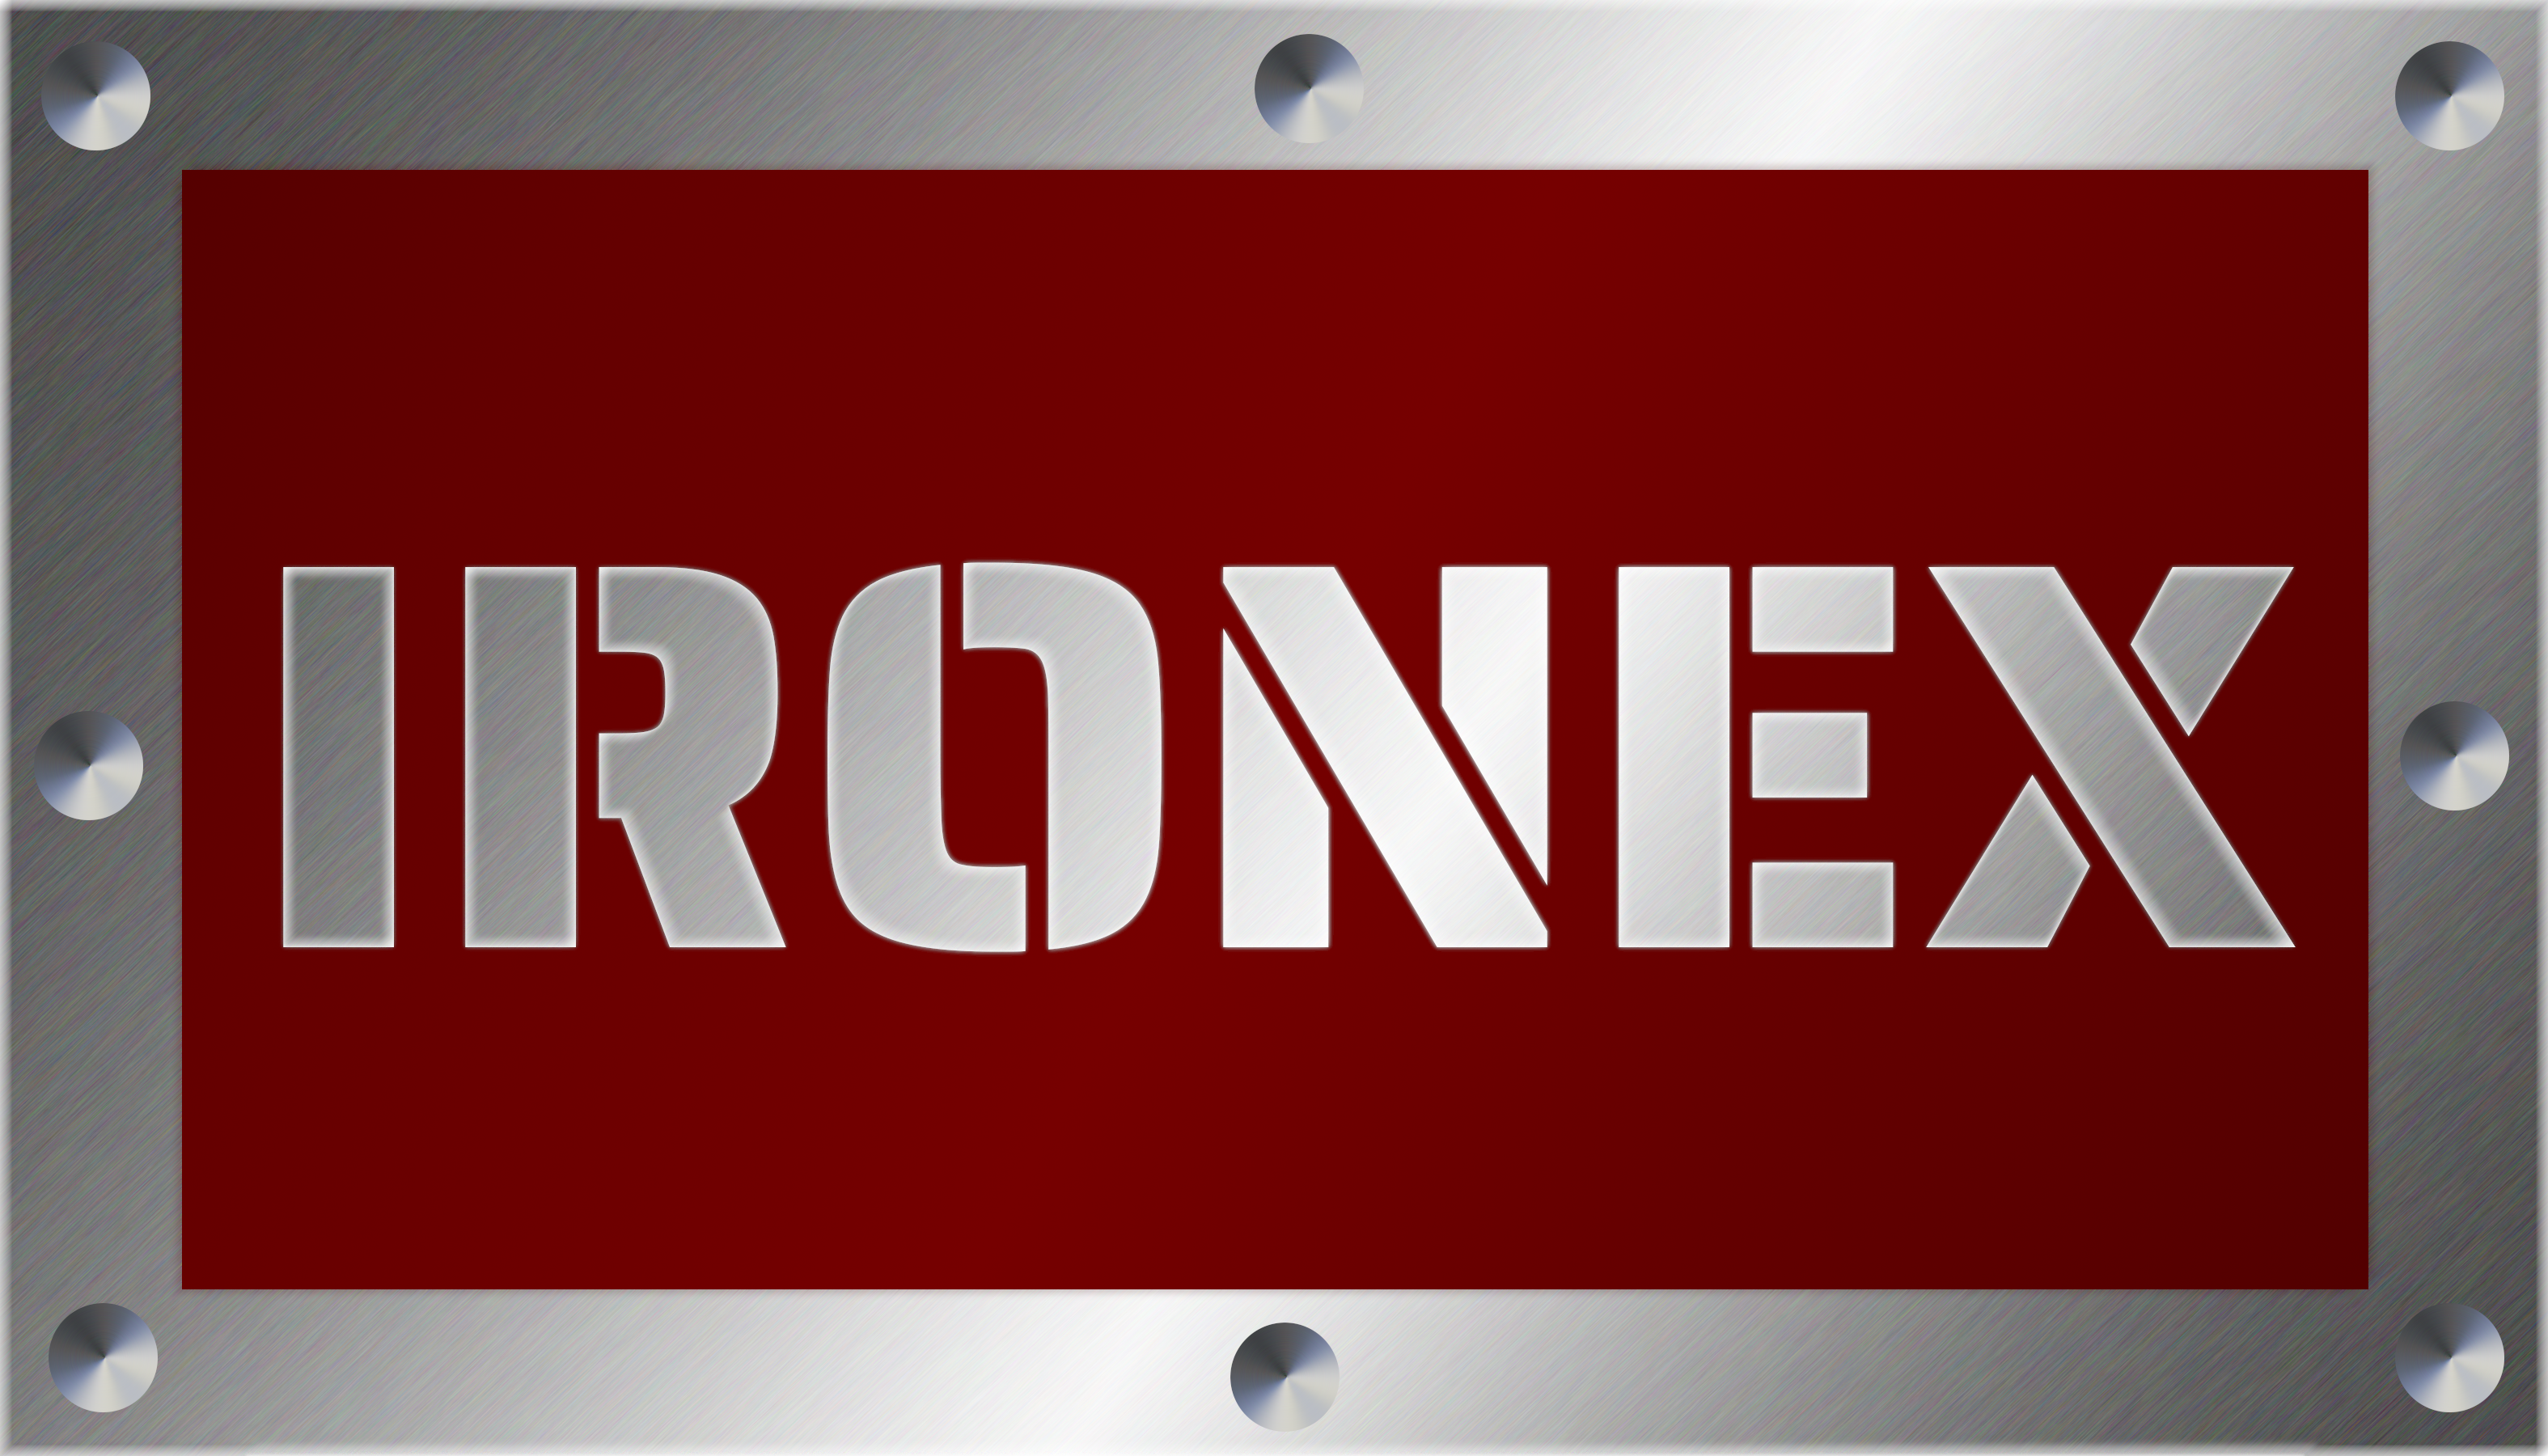 IRONEX [logo]